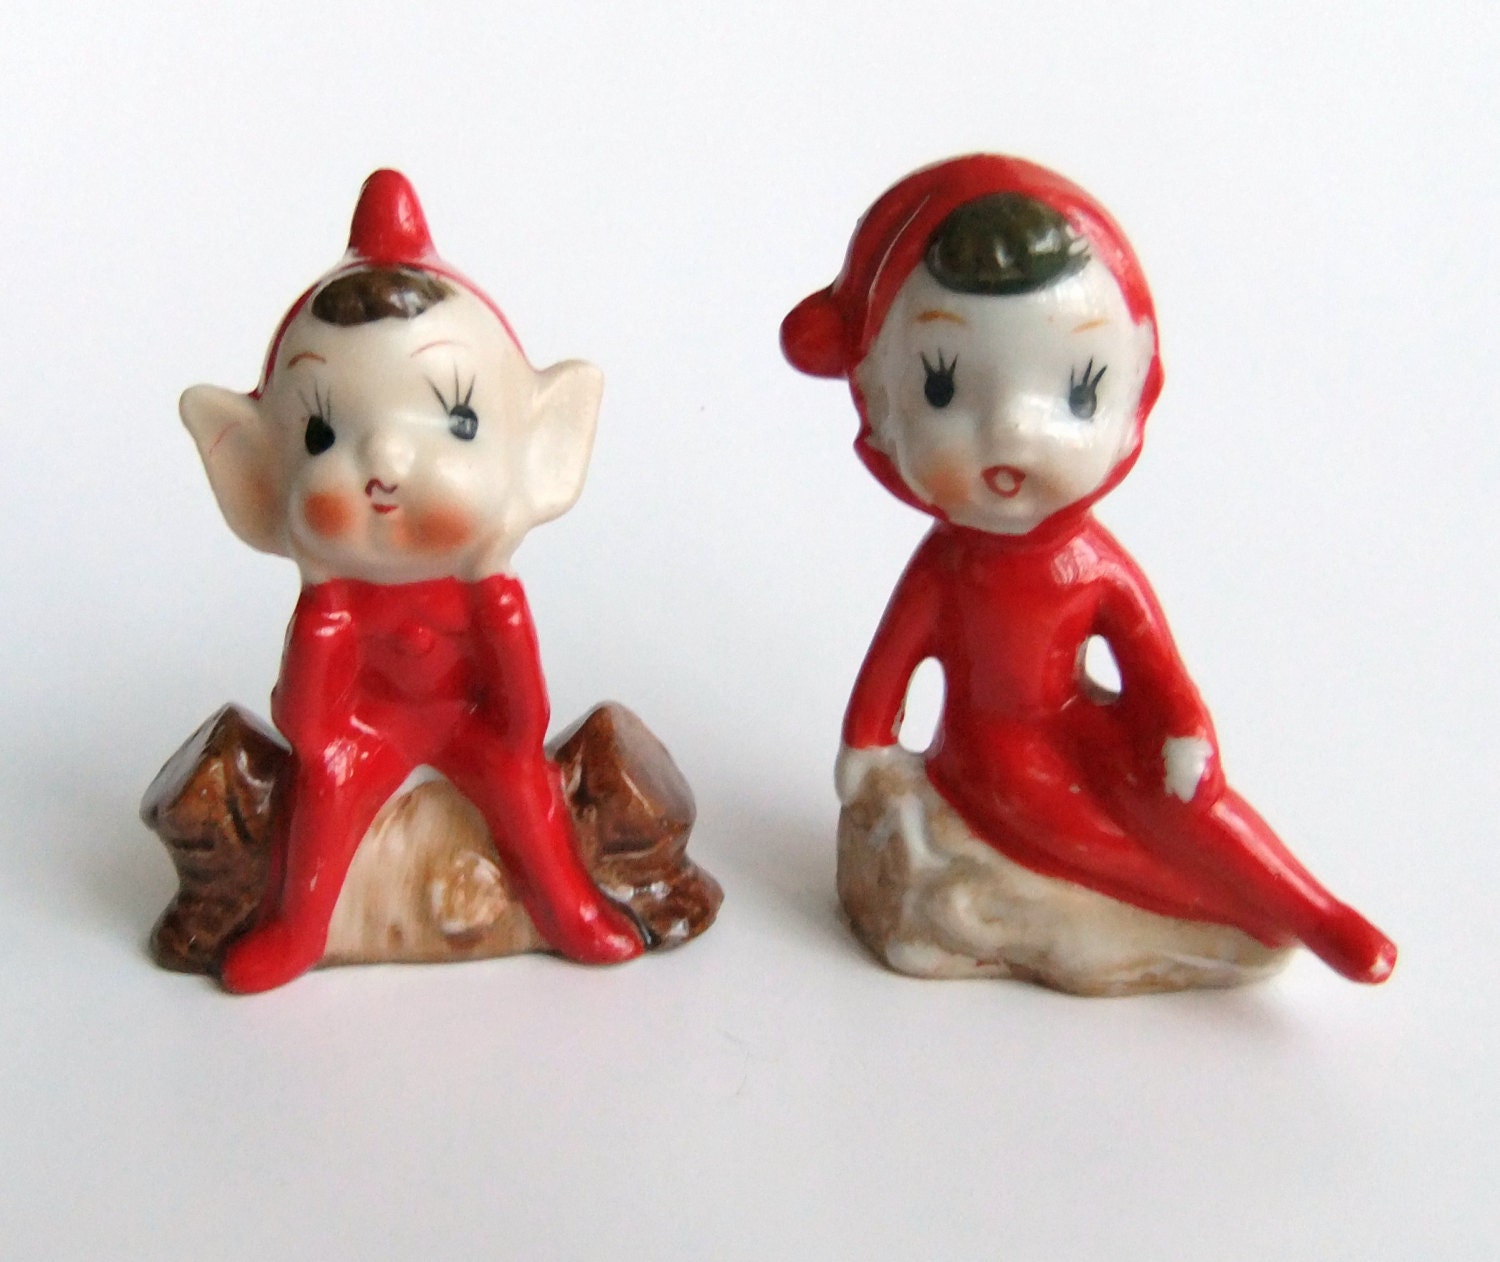 Vintage Pixie Elf Figurines Red Boy and Girl Japan Pixie